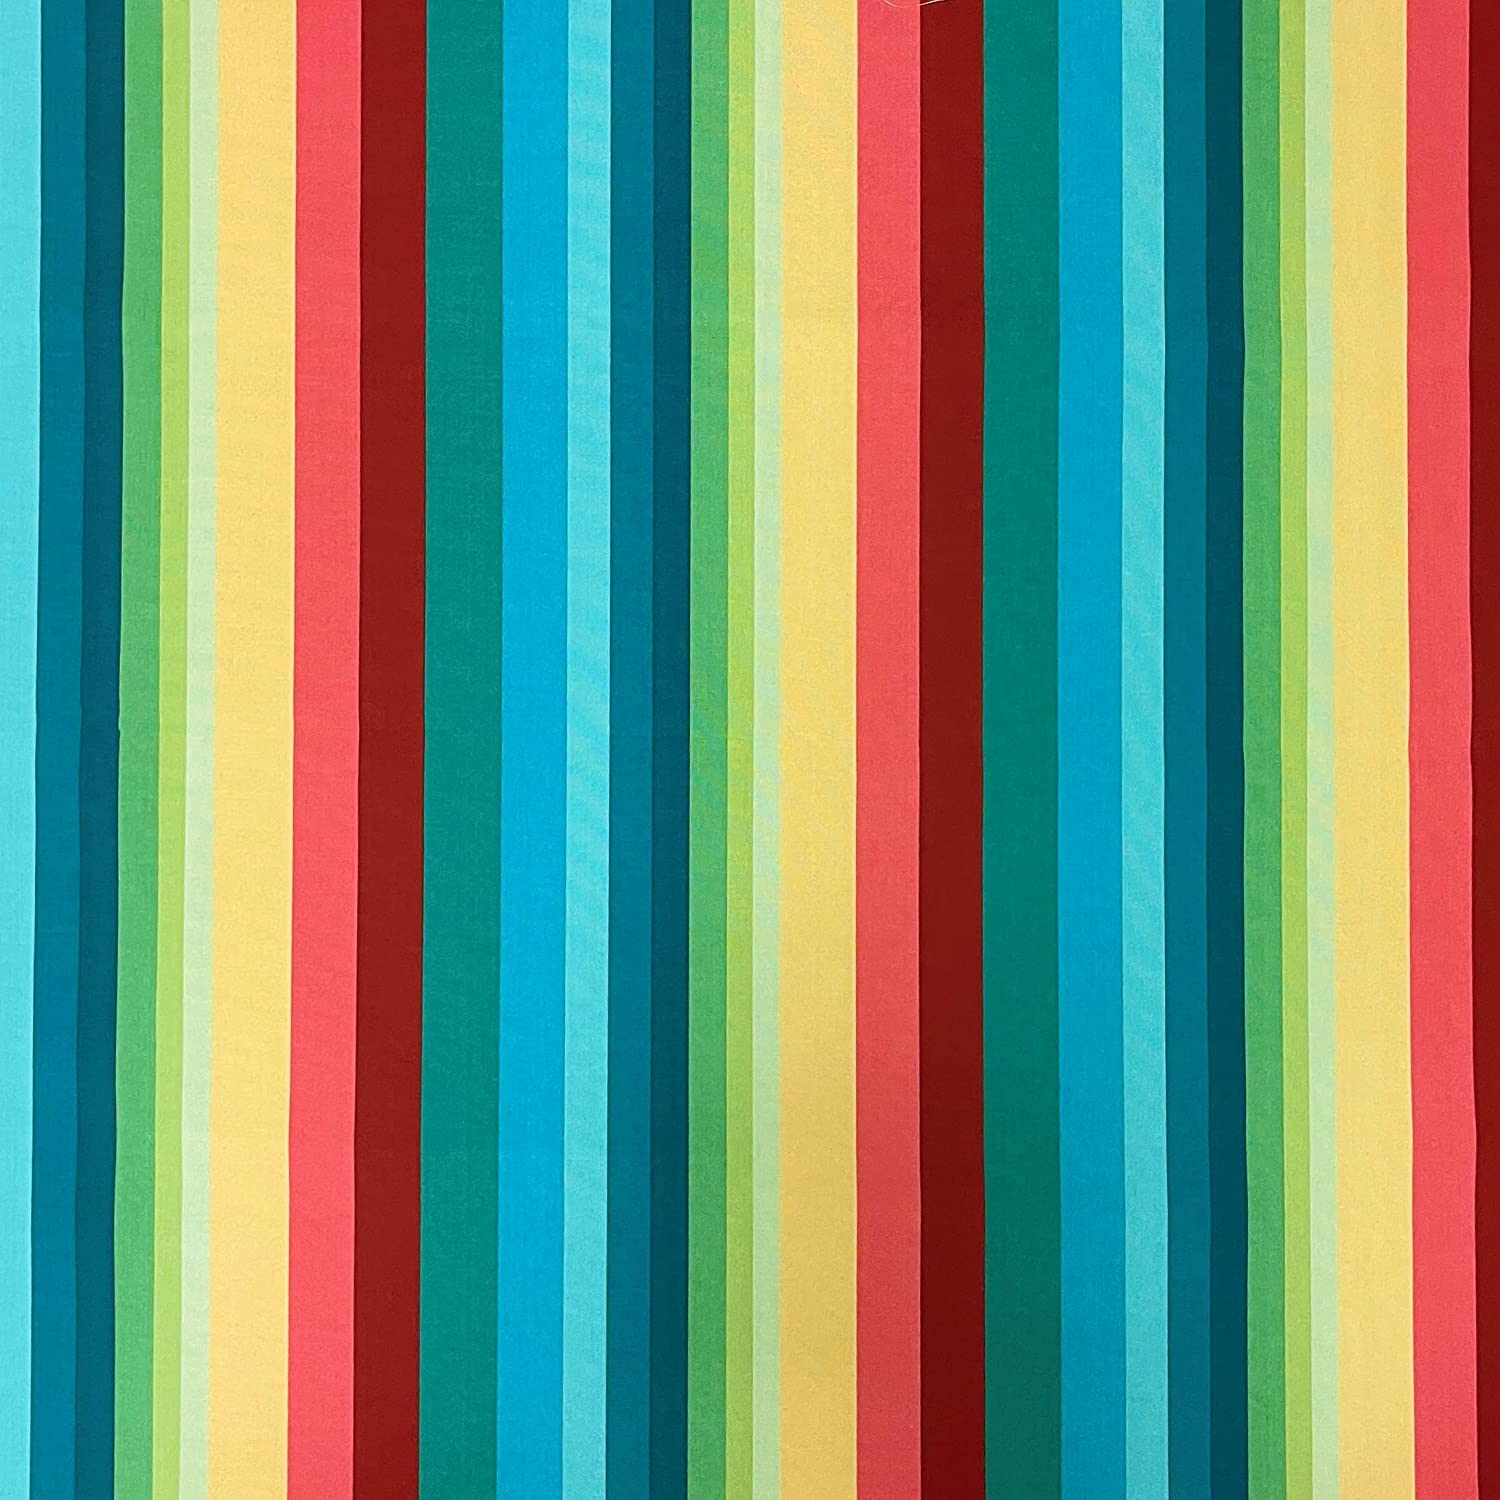  Braymont Multi Color Stripe